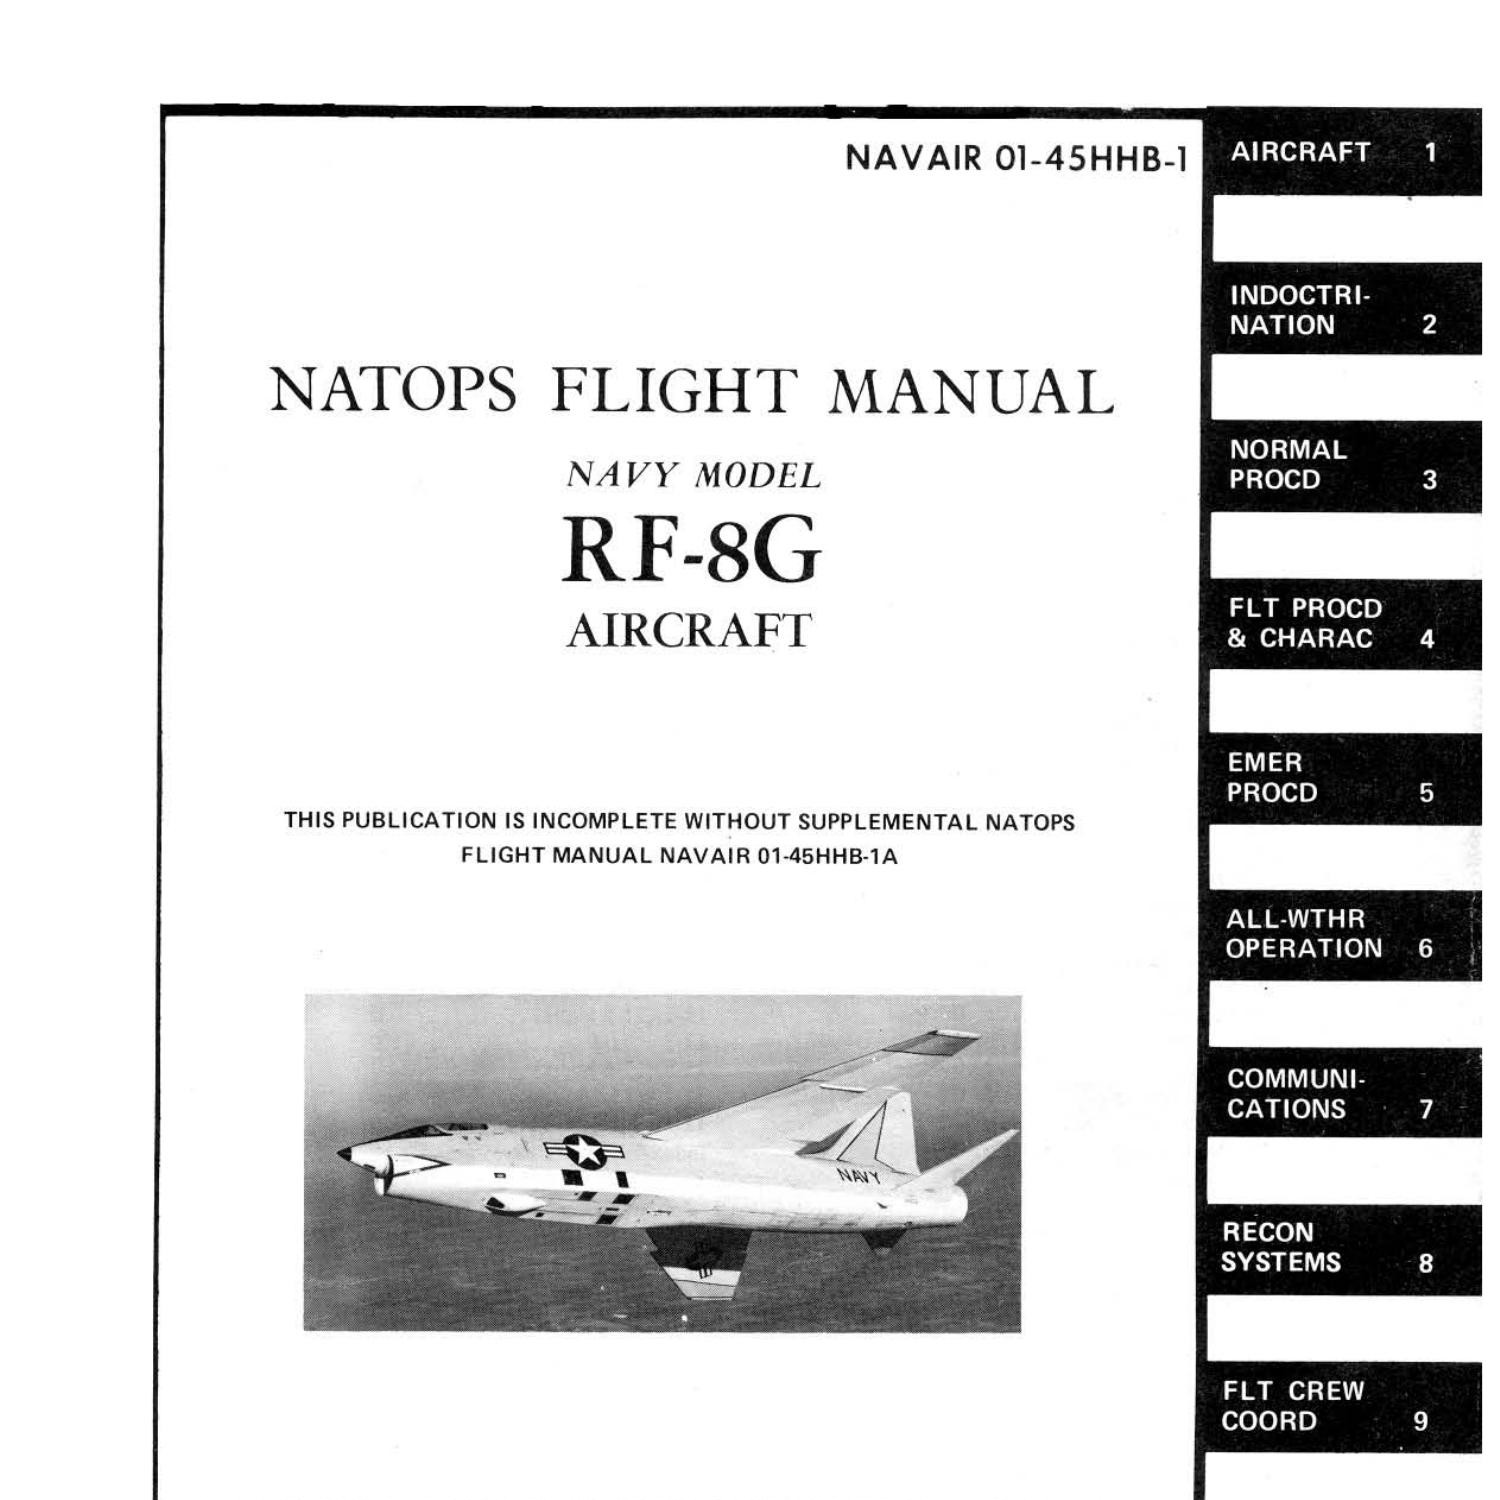 Flight manual. Flight manual f-14b. Performance manual aircraft. Flight manual Cover. Aviation перевод